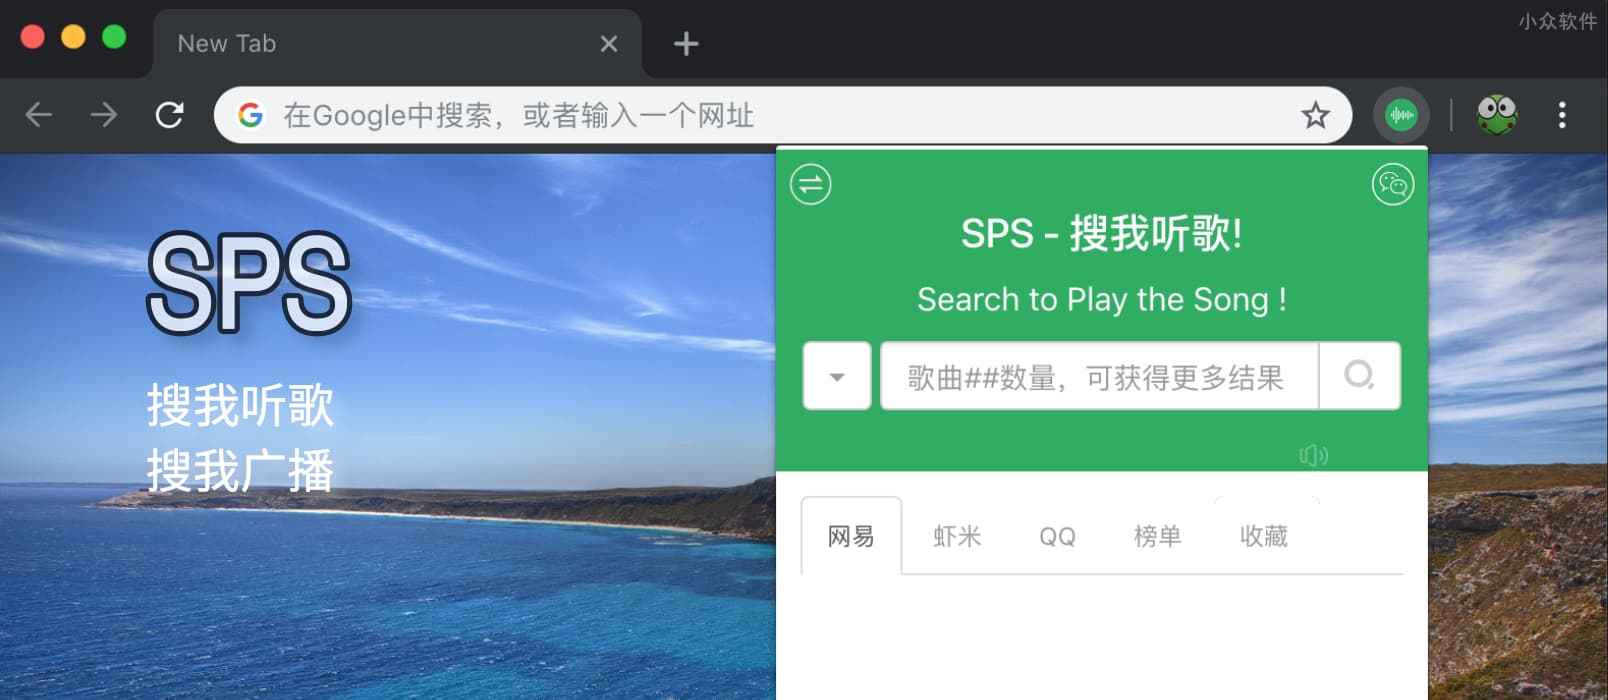 SPS – 搜我听歌，搜我电台，Chrome 上的极简听歌扩展